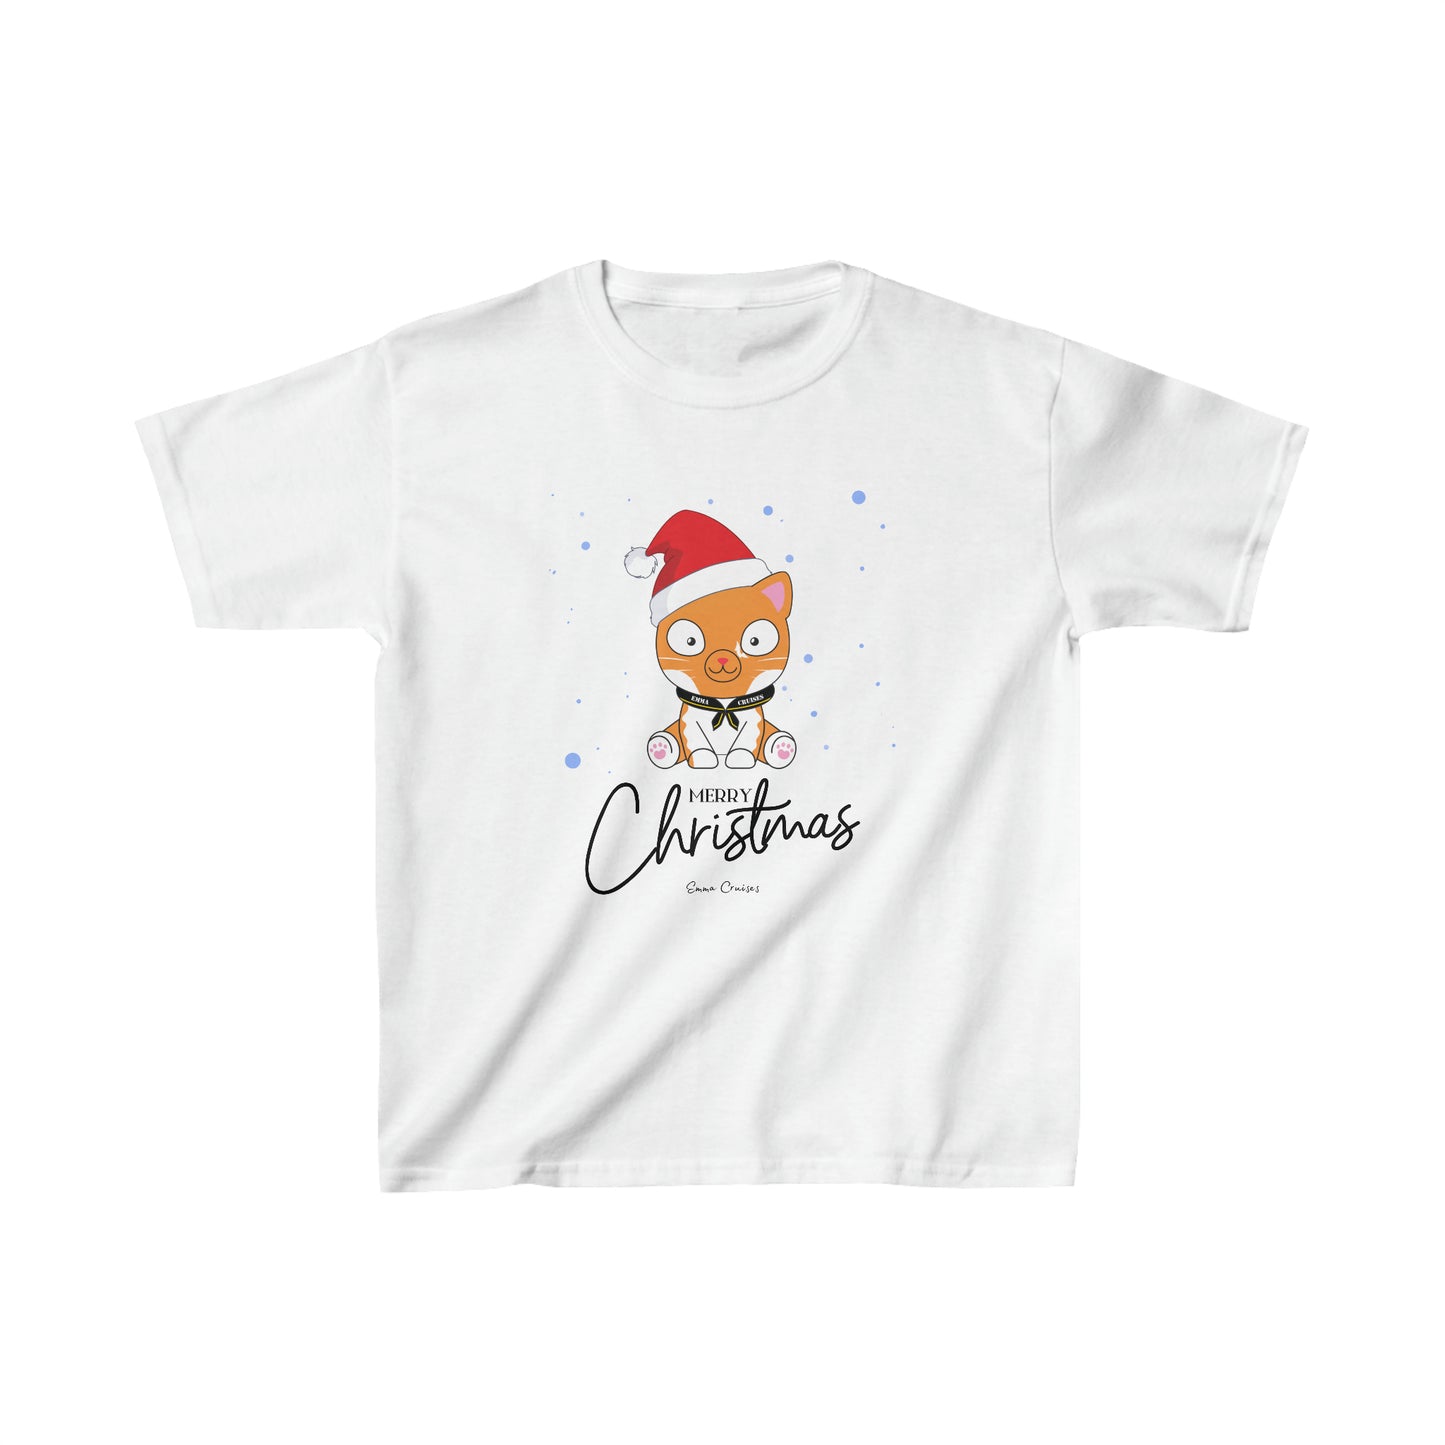 Merry Christmas - Kids UNISEX T-Shirt